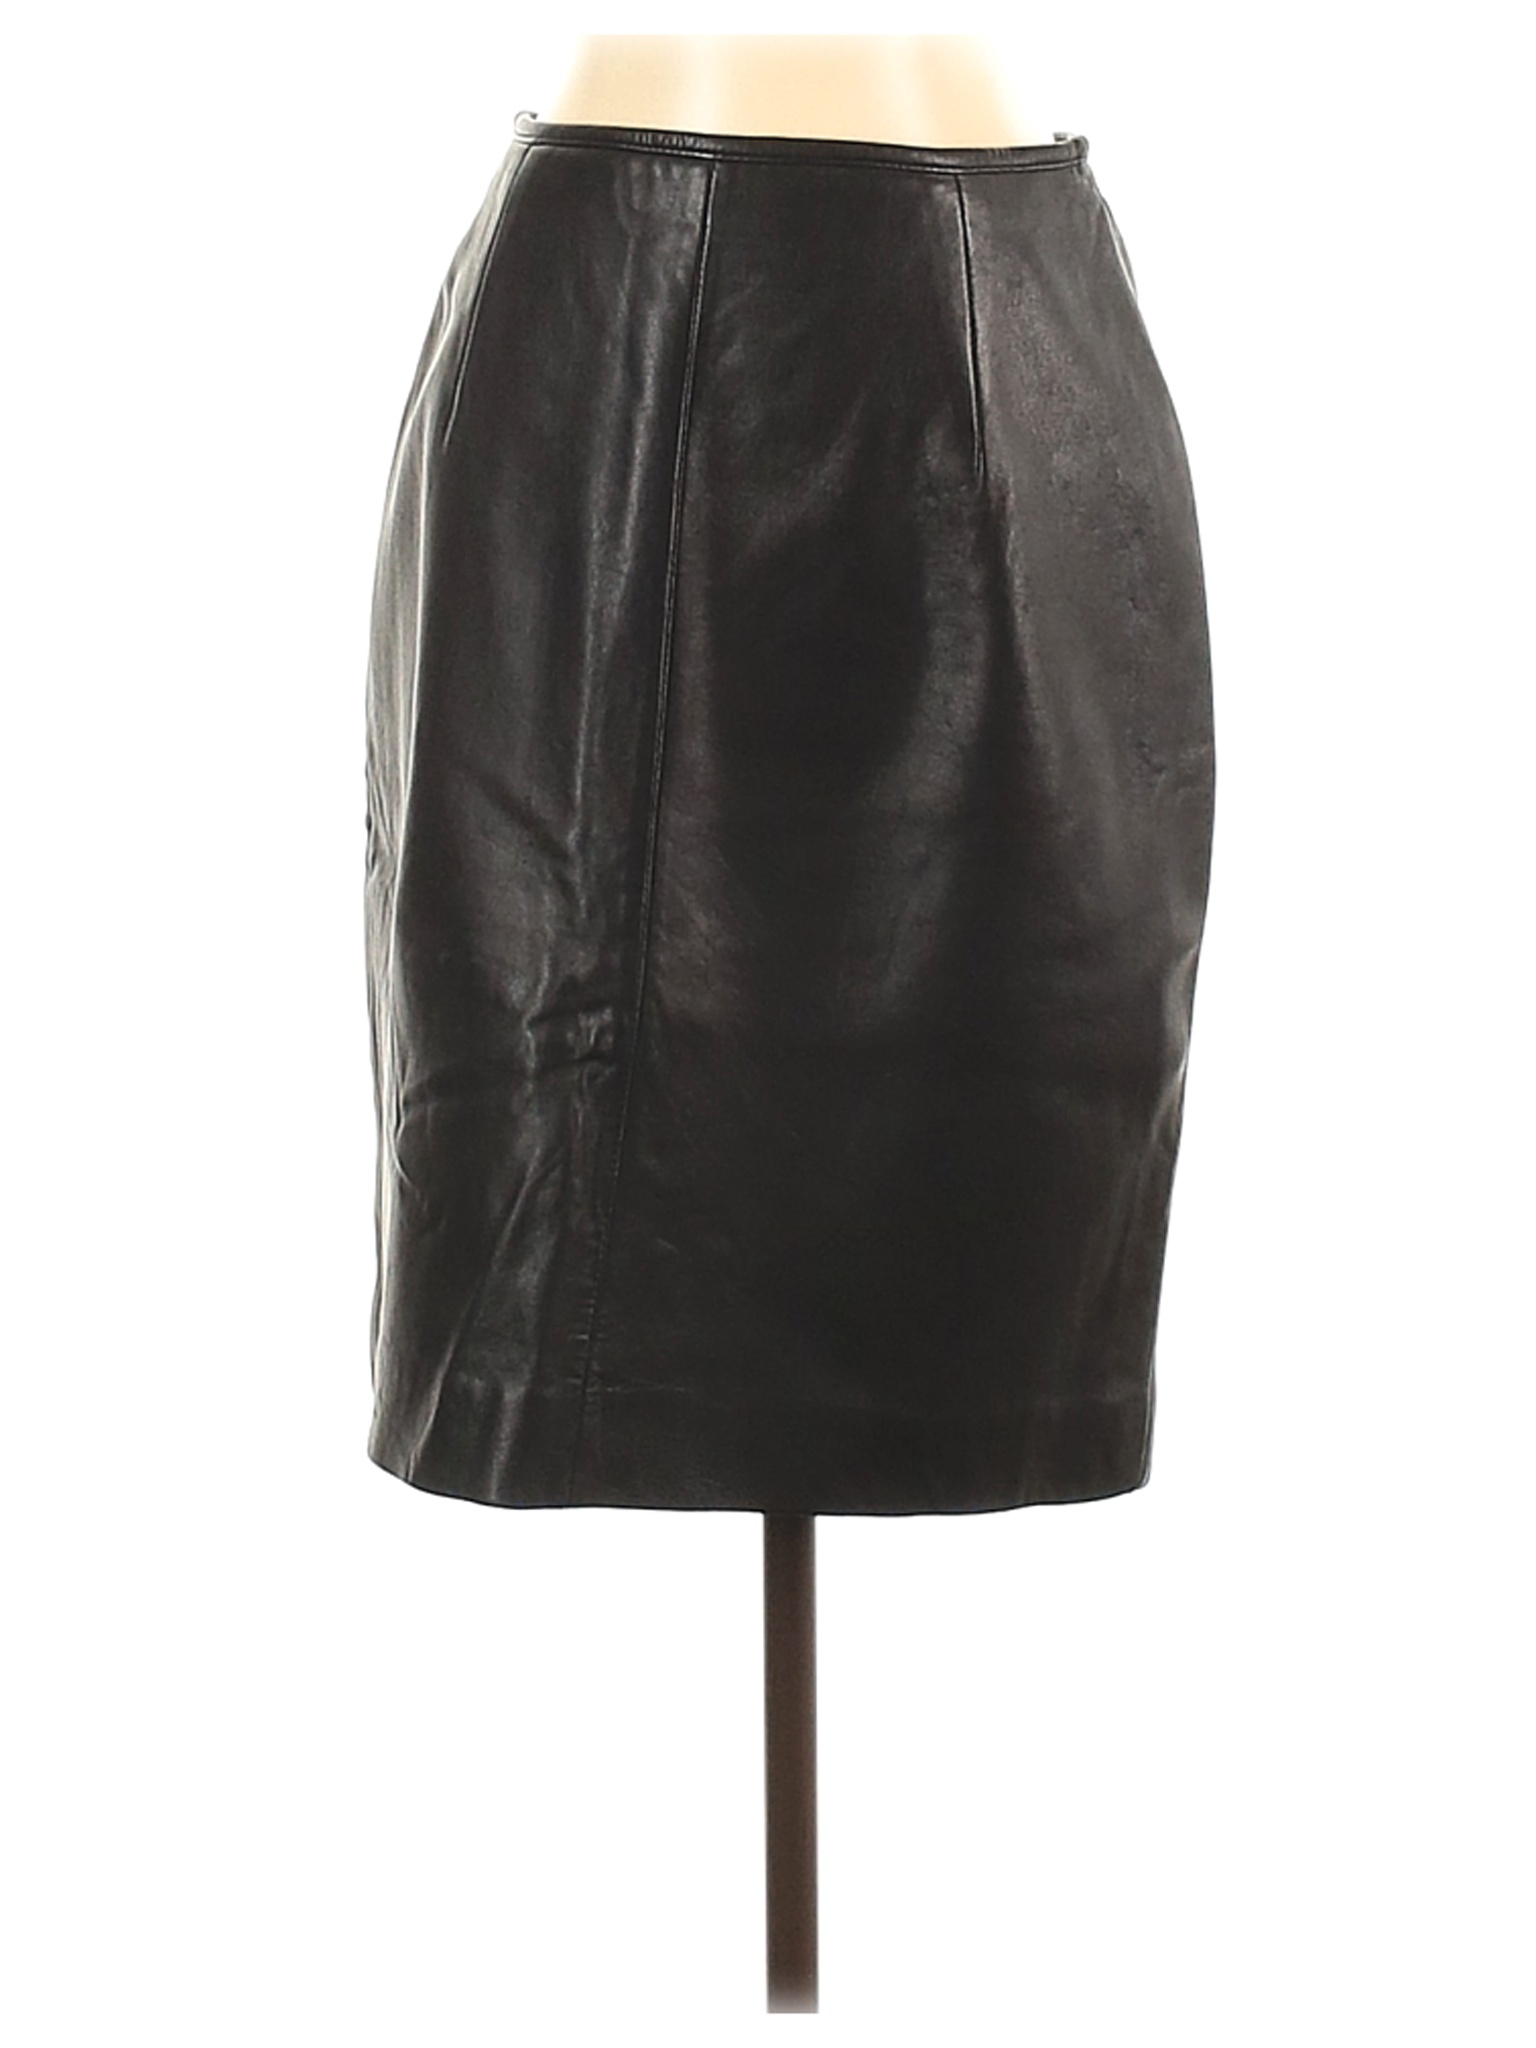 Lauren by Ralph Lauren Women Black Leather Skirt 4 | eBay